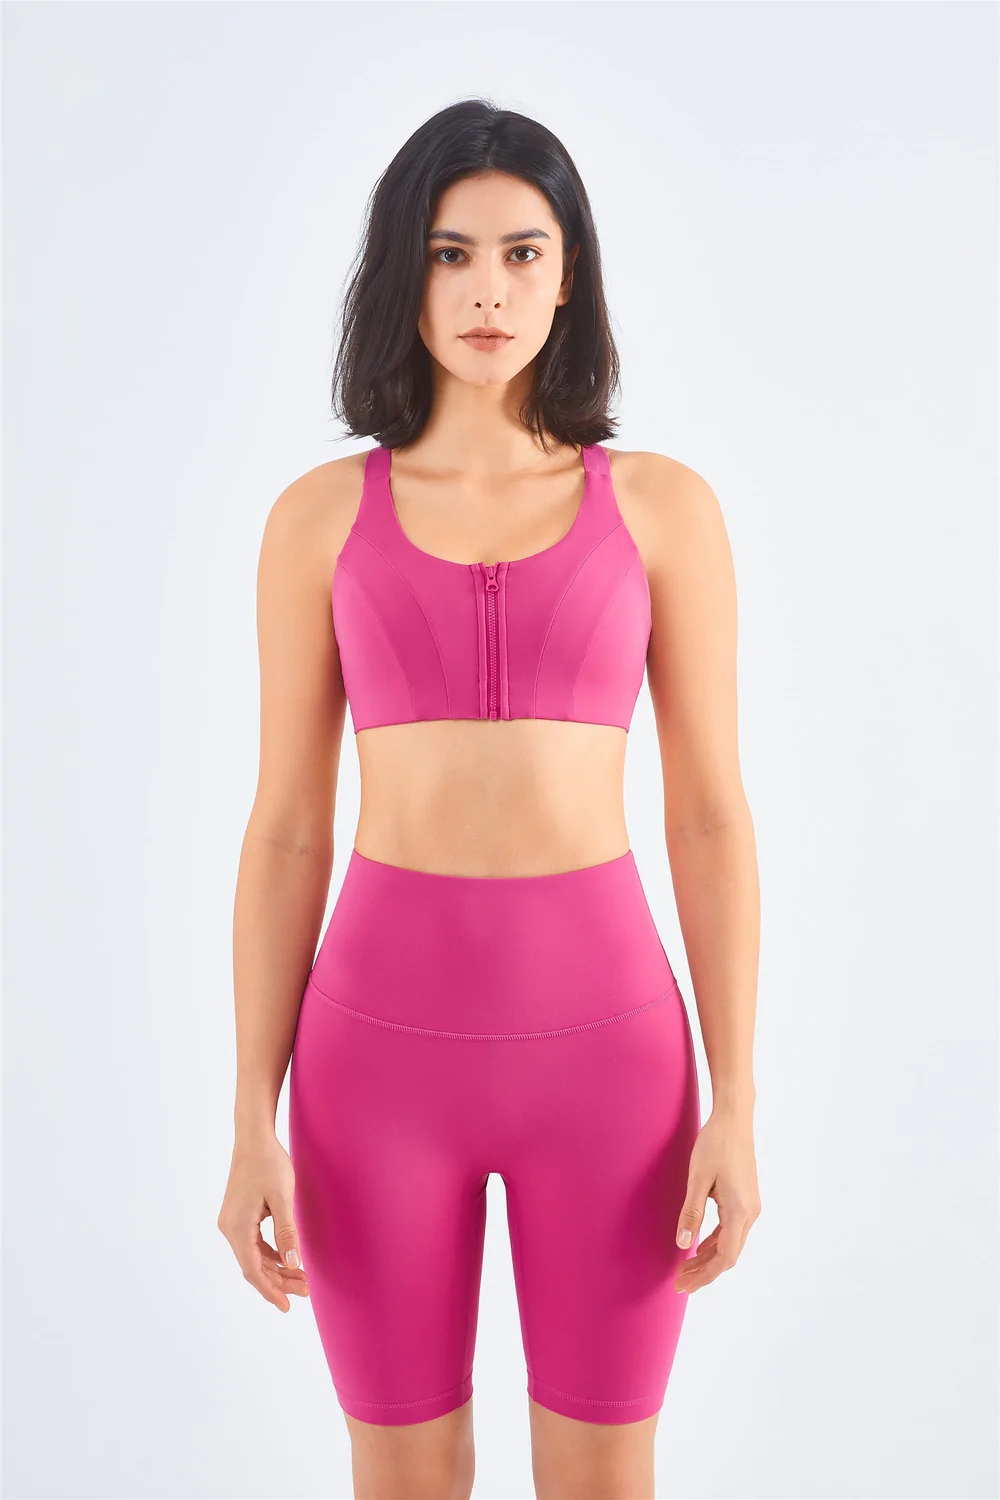 VS Pink Yoga Pushup Sports Bra  Fashion tips, Clothes design, Cute bras